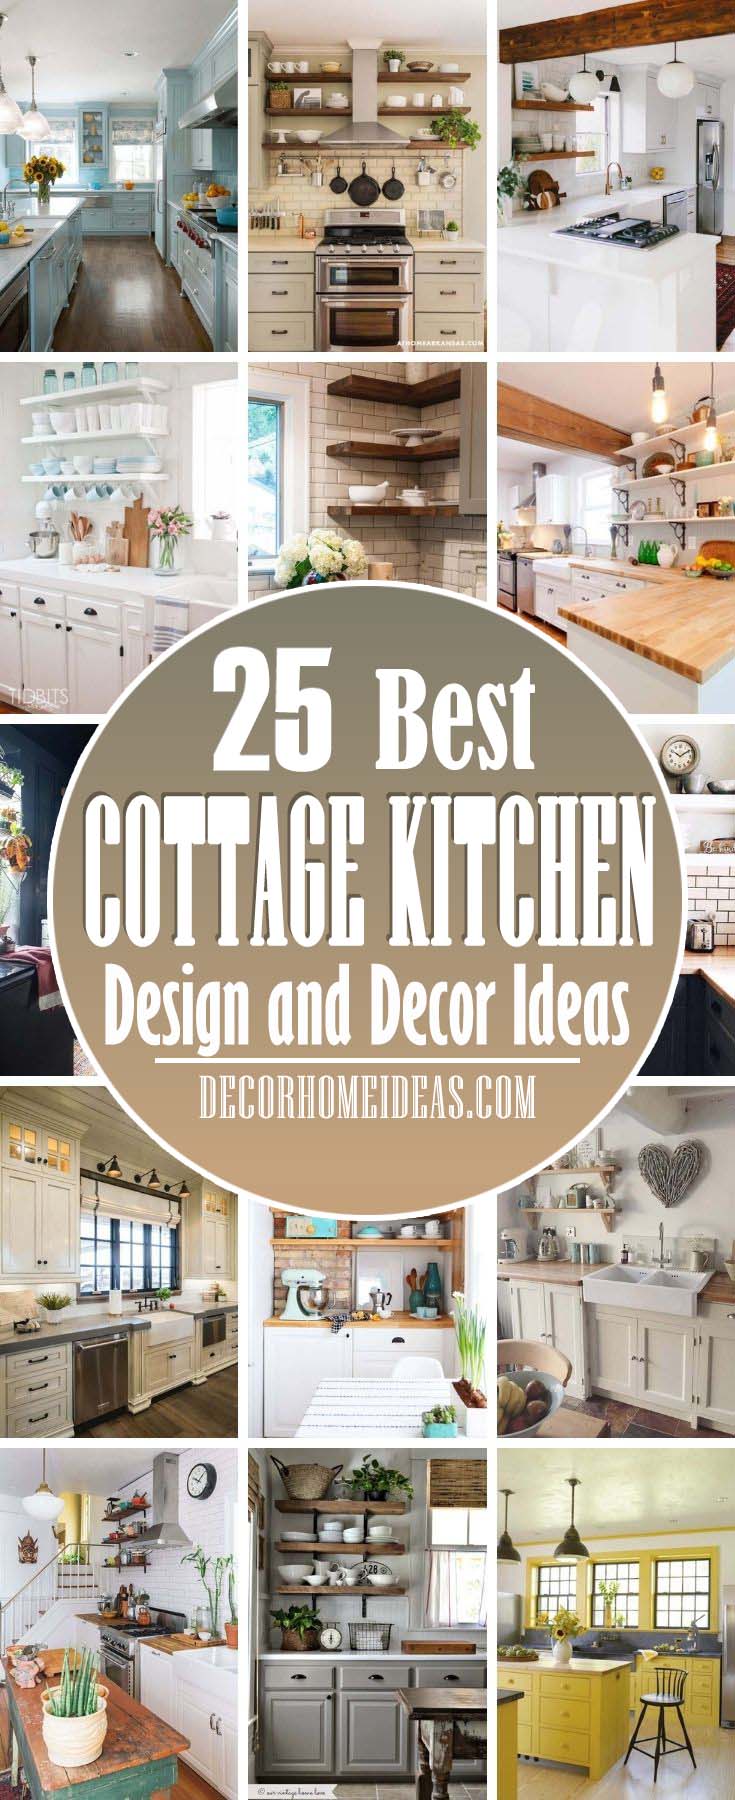 25 Charming Cottage Kitchen Design and Decorating Ideas   Decor ...